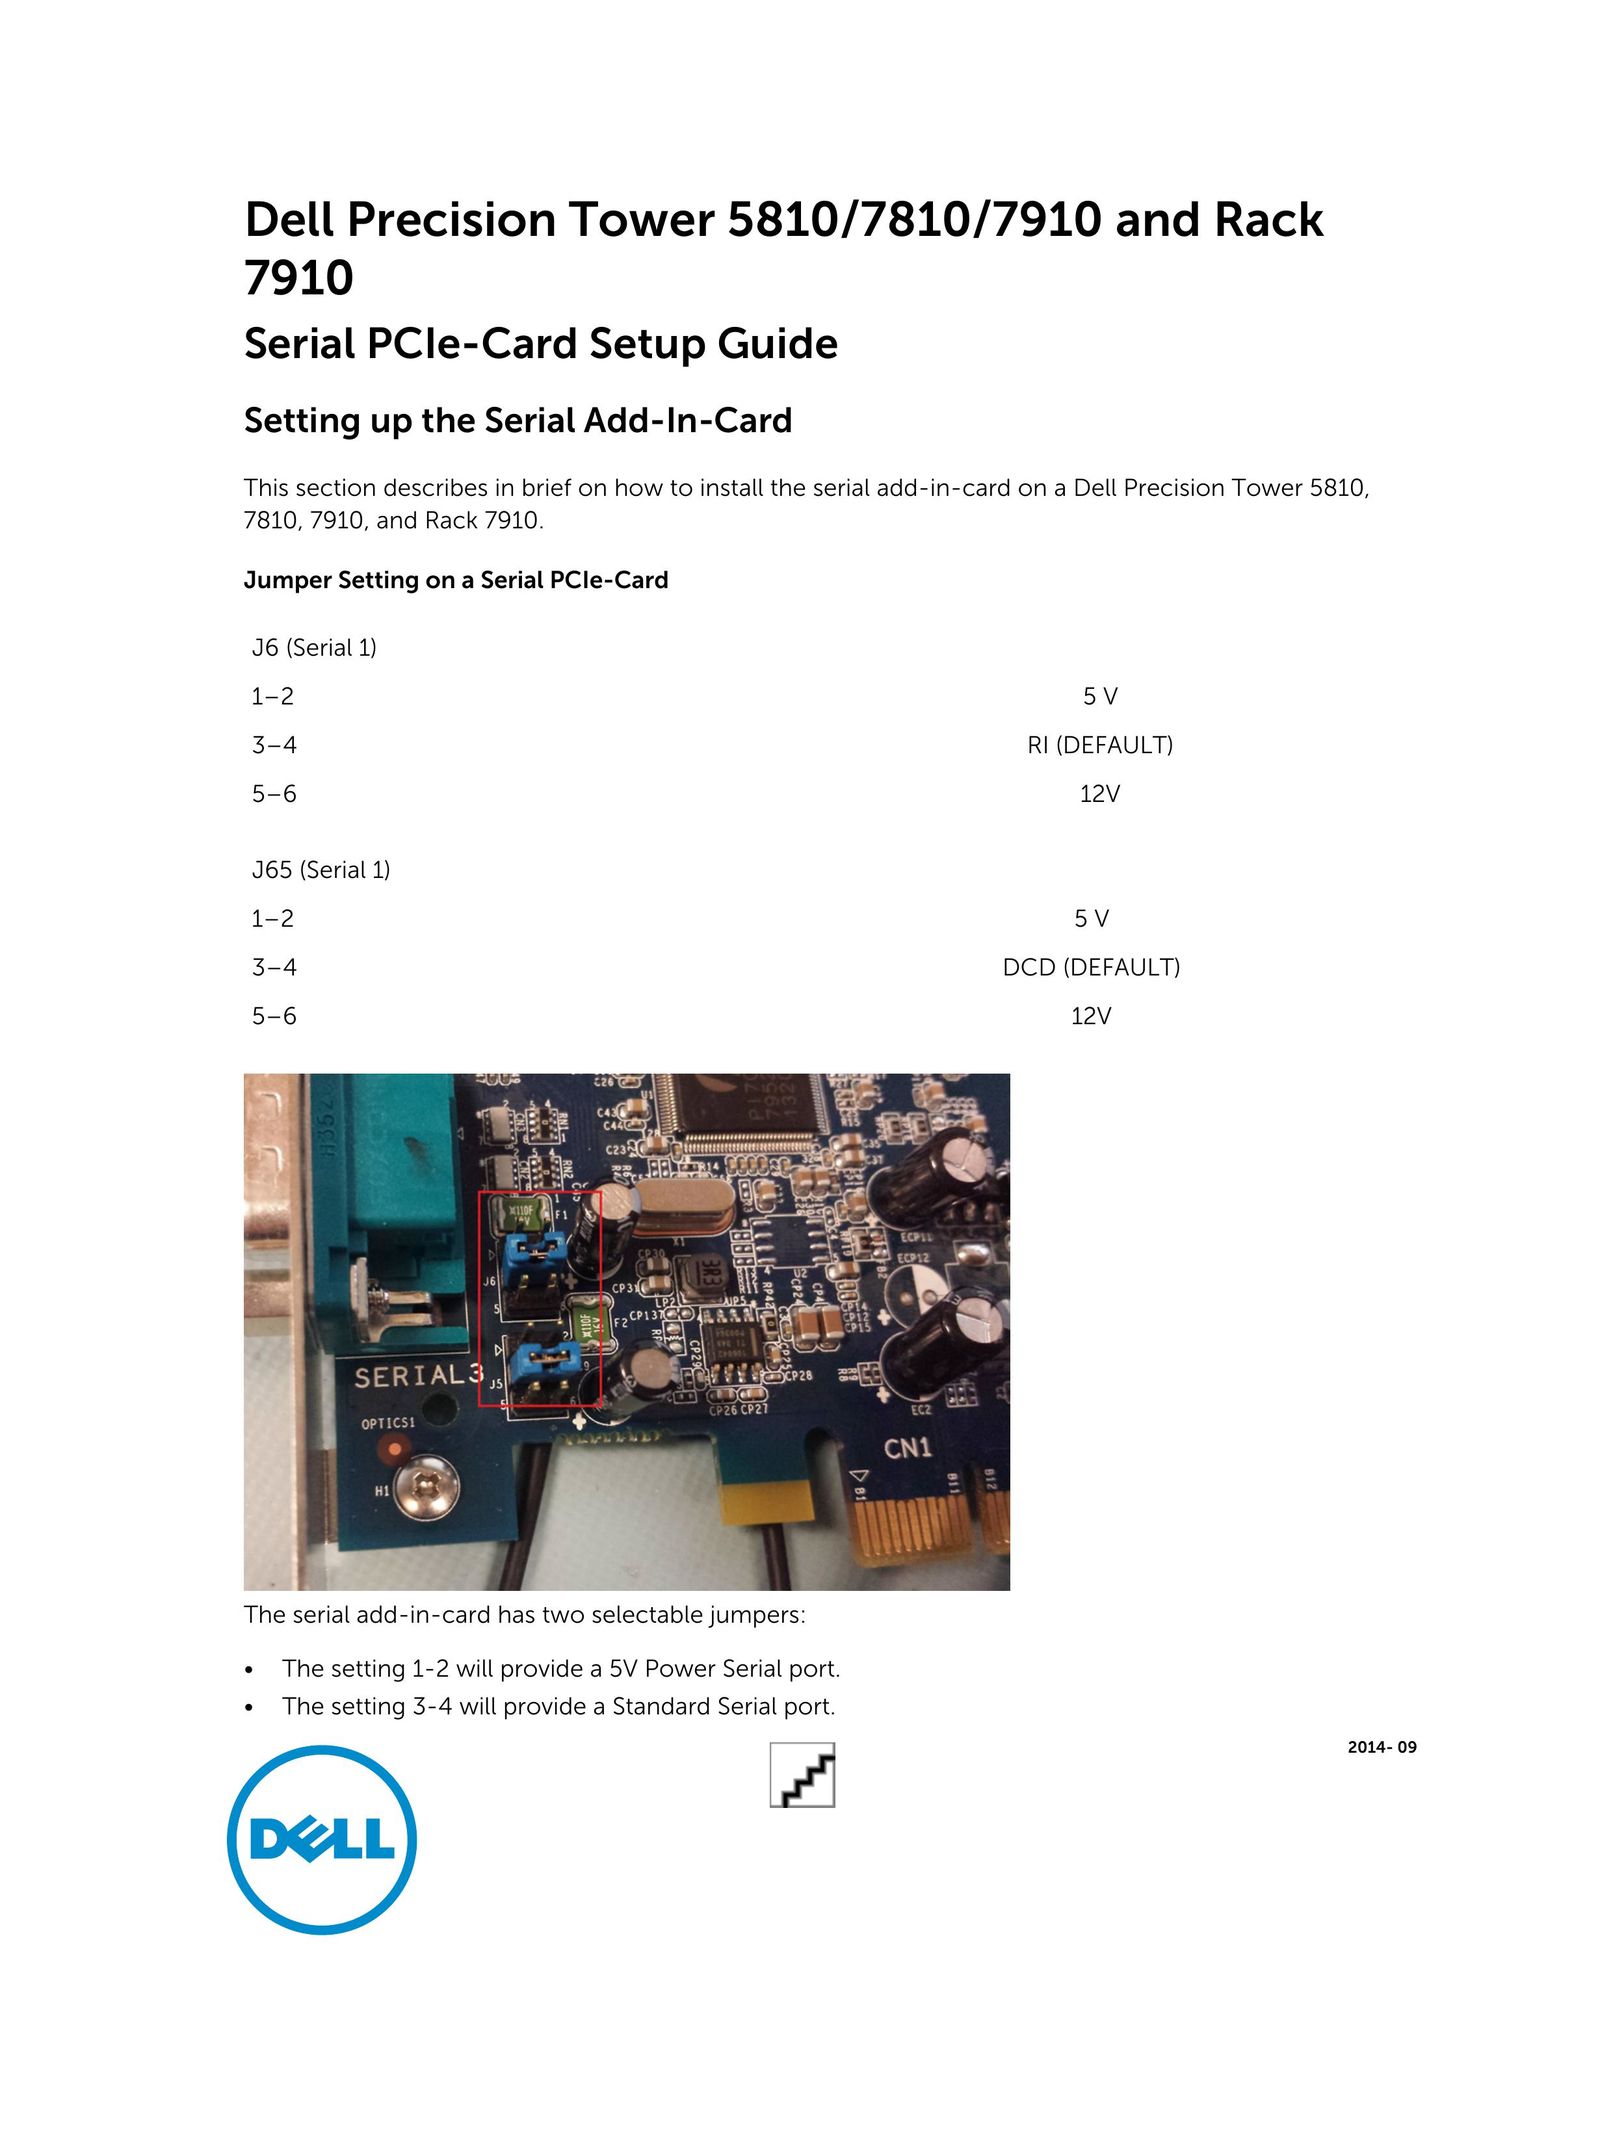 Dell 7910 Computer Hardware User Manual